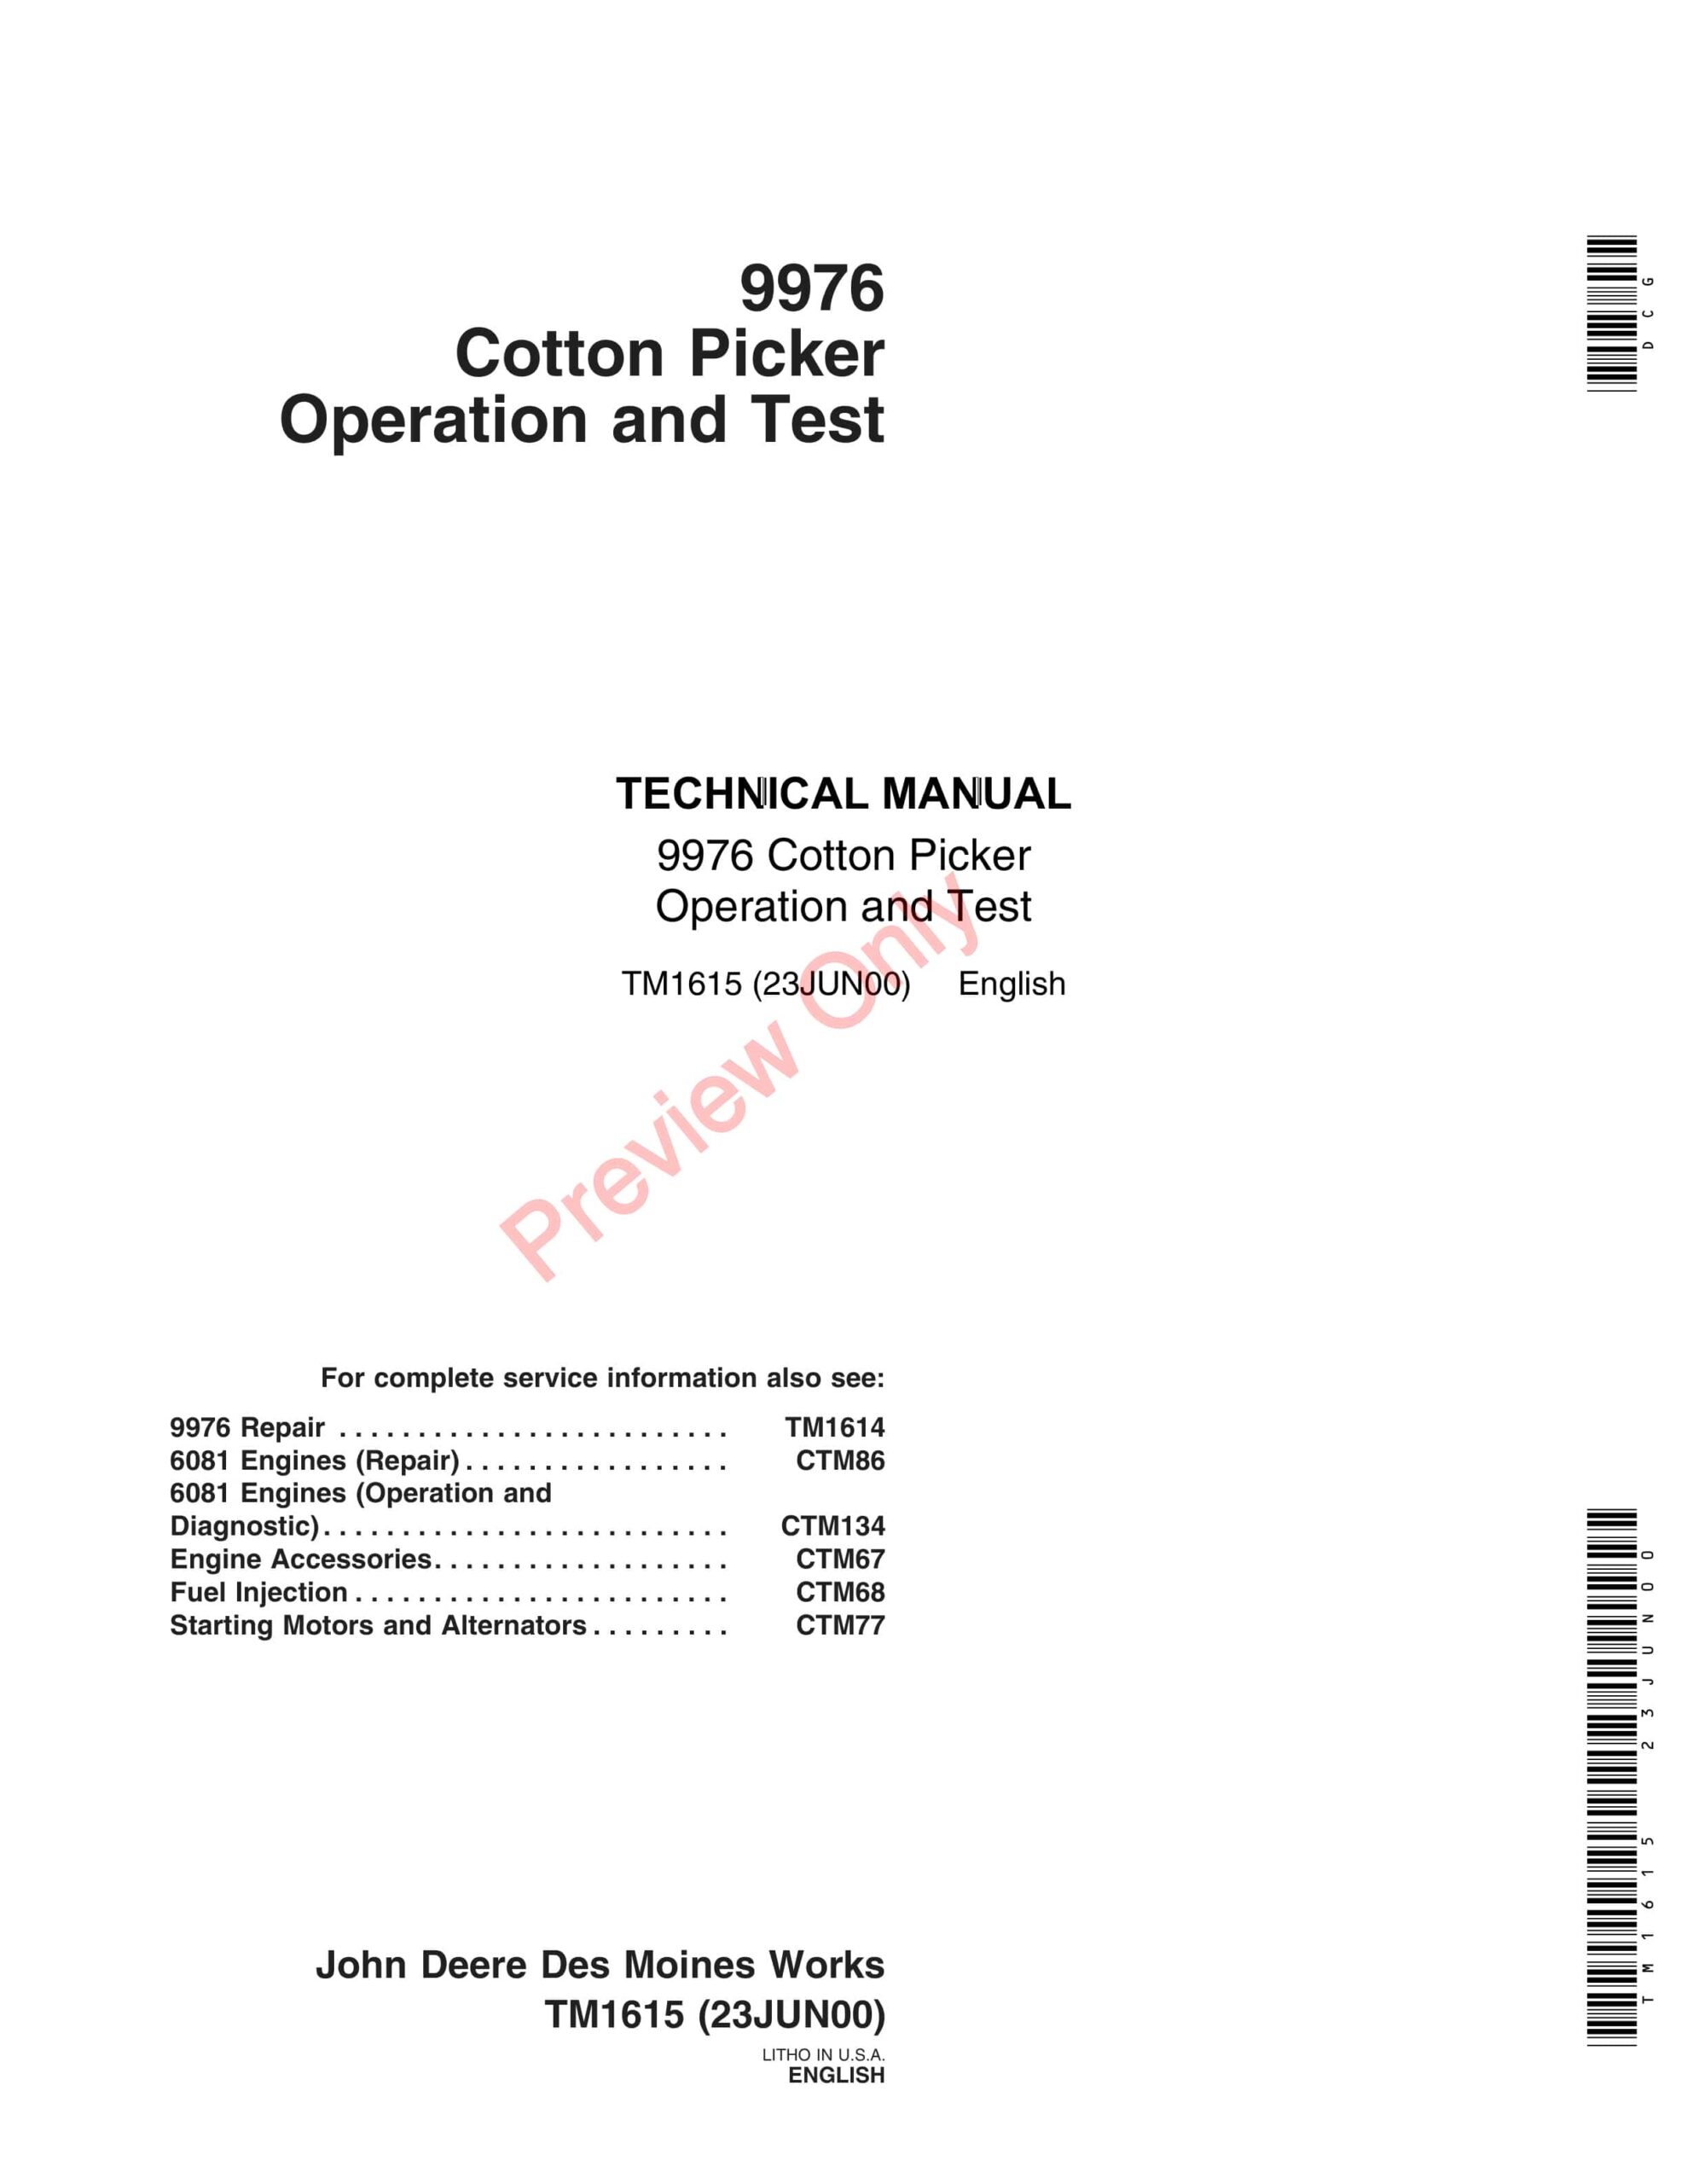 John Deere 9976 Cotton Picker Technical Manual TM1615 23JUN00-1